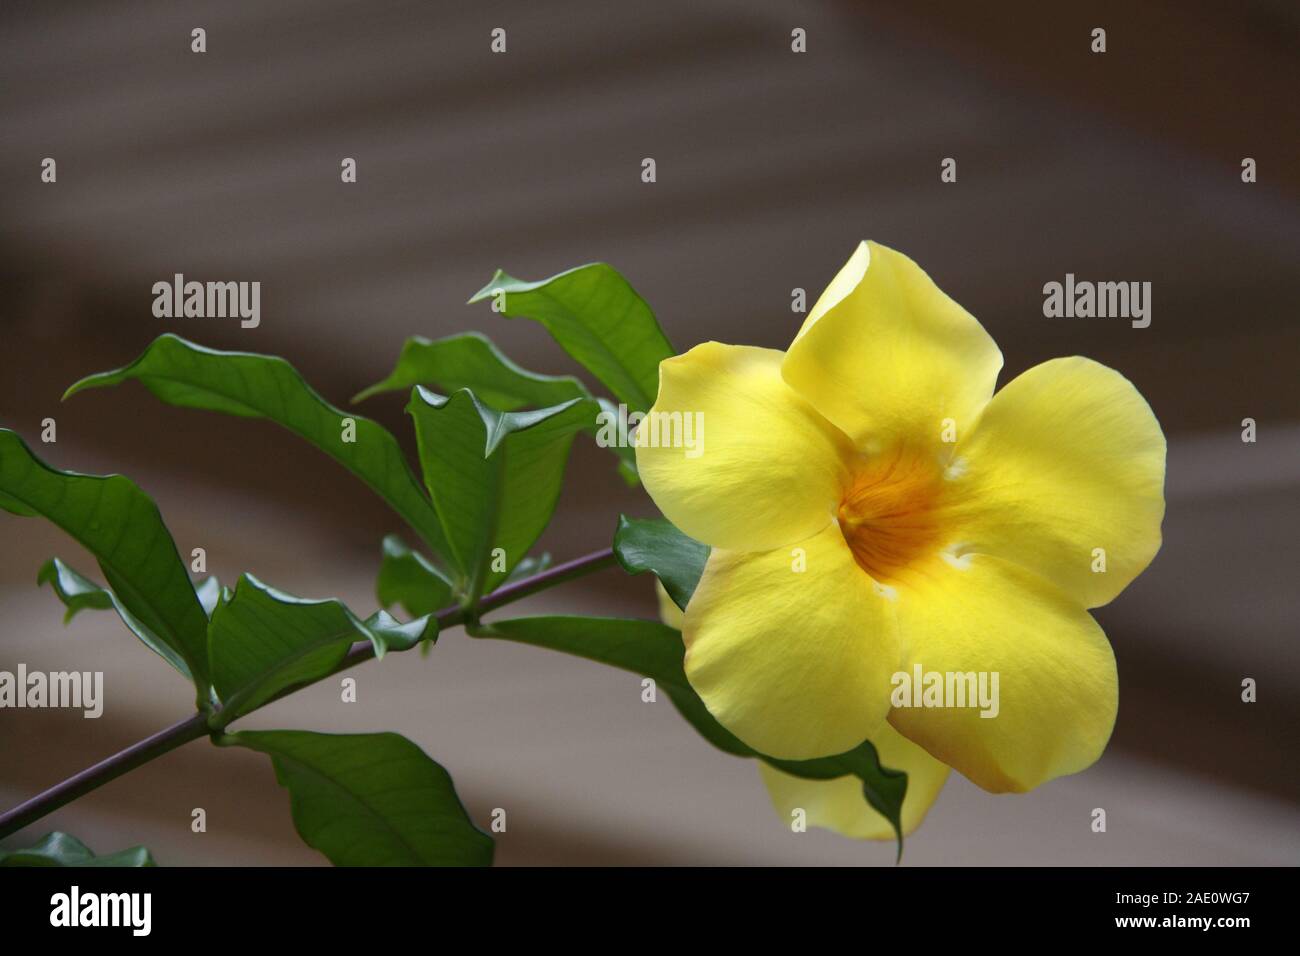 Yellow Angel's Trumpet Flower (Allamanda Cathartica) Stock Photo